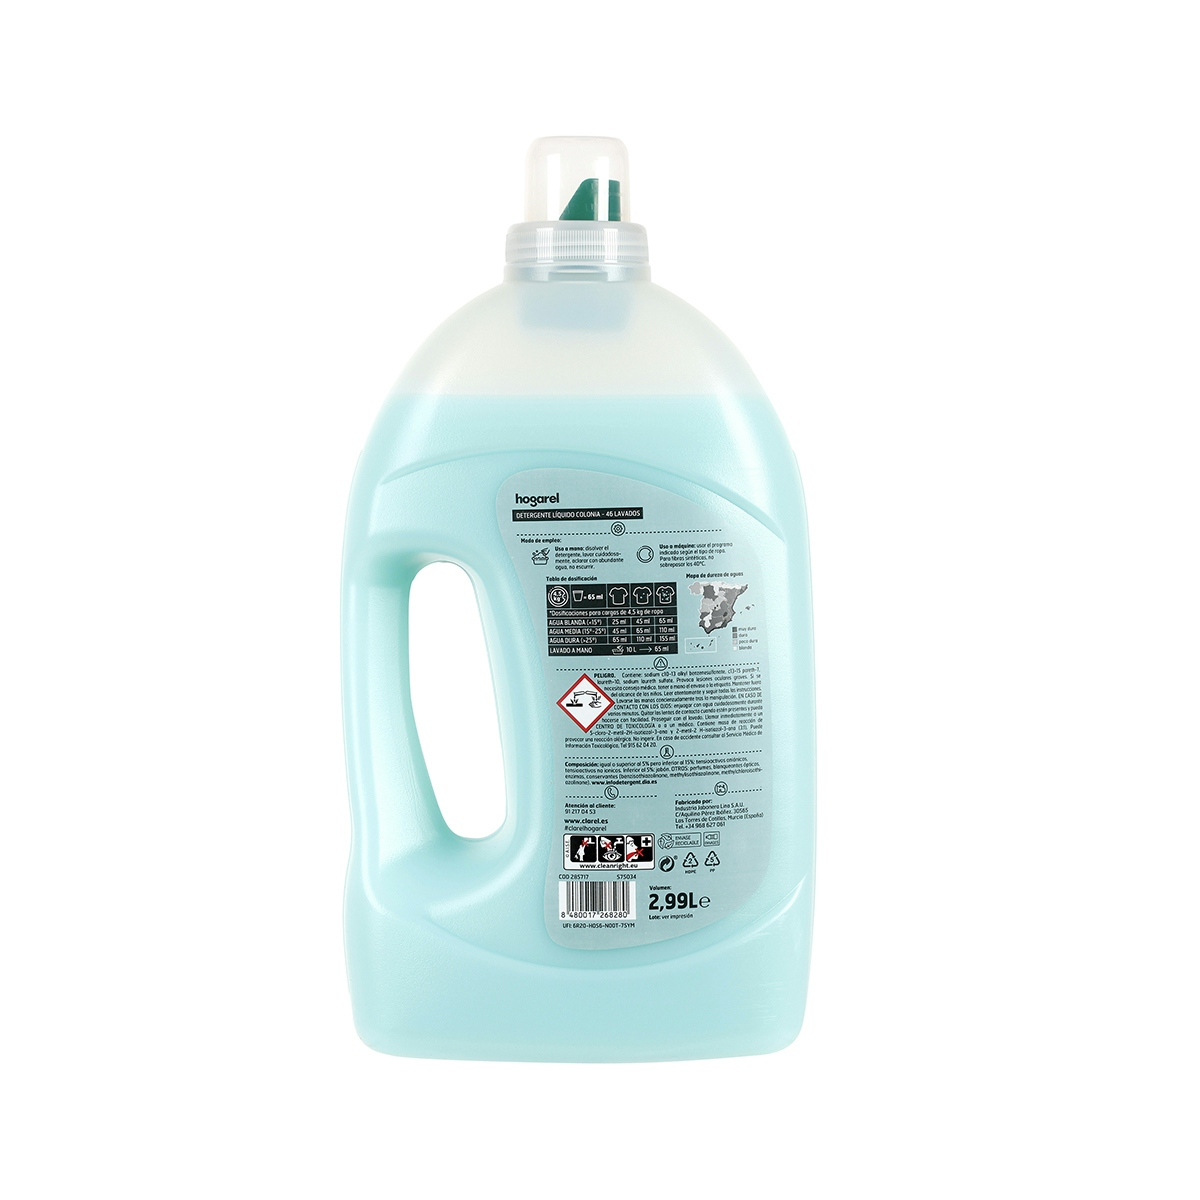 Detergente Liquido Colonia Hogarel 46 Lav 2,99L